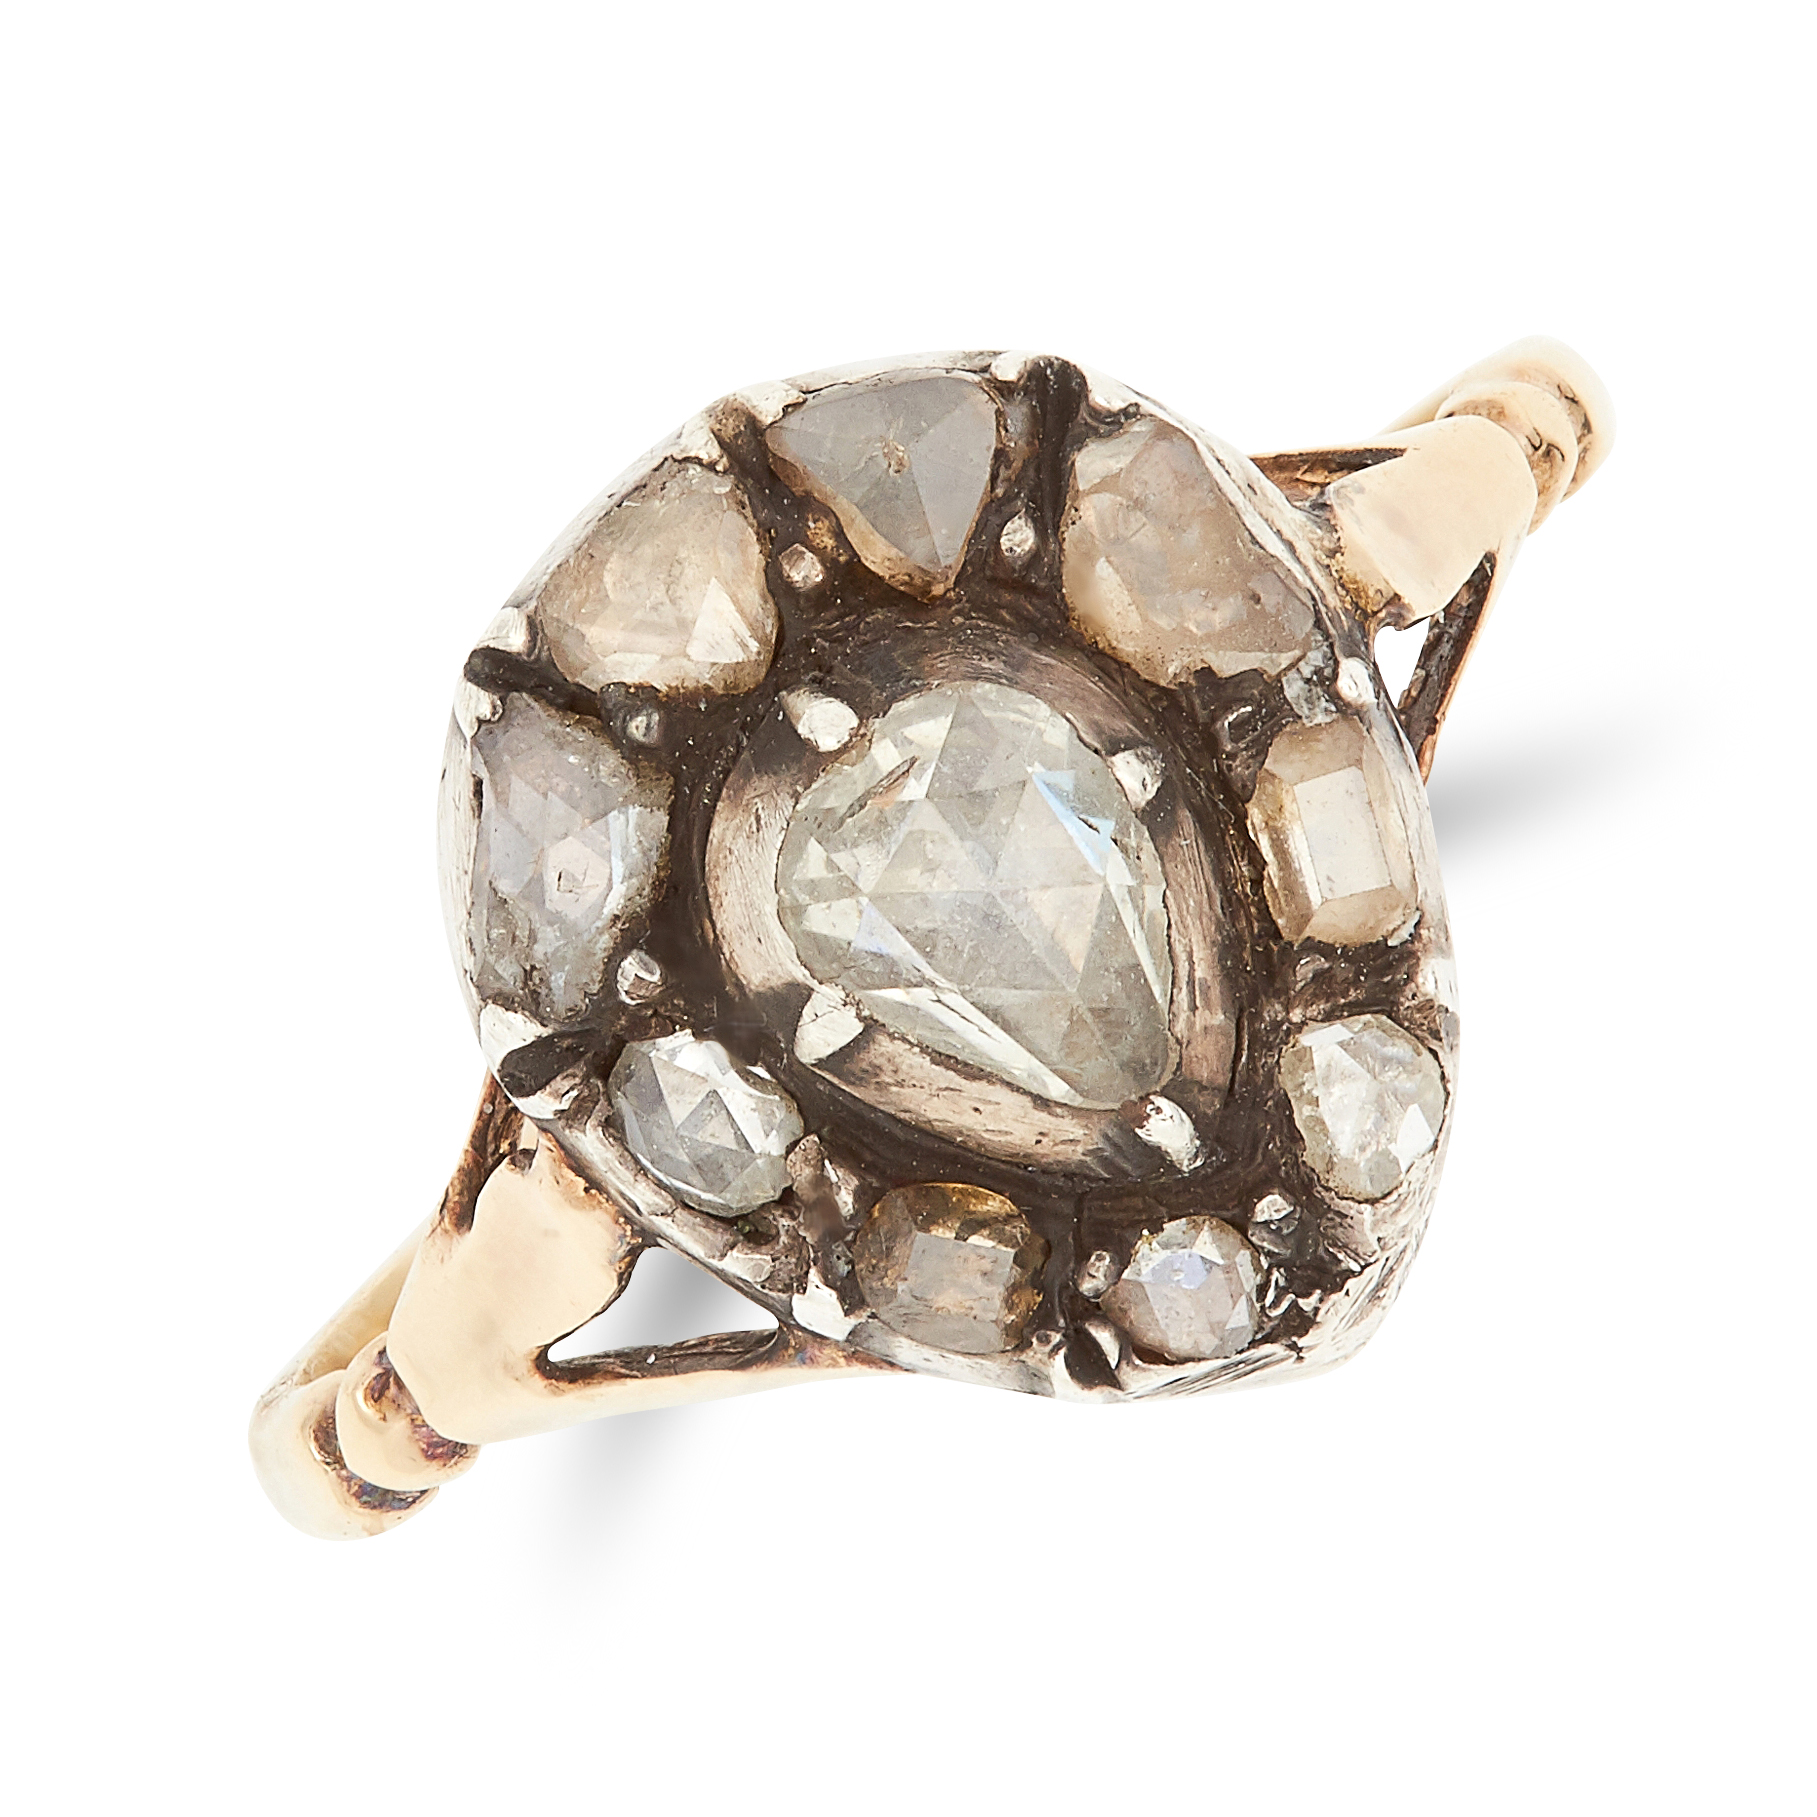 ANTIQUE GEORGIAN DIAMOND RING set with rose cut diamonds in foliate design, size M / 6, 2.3g.